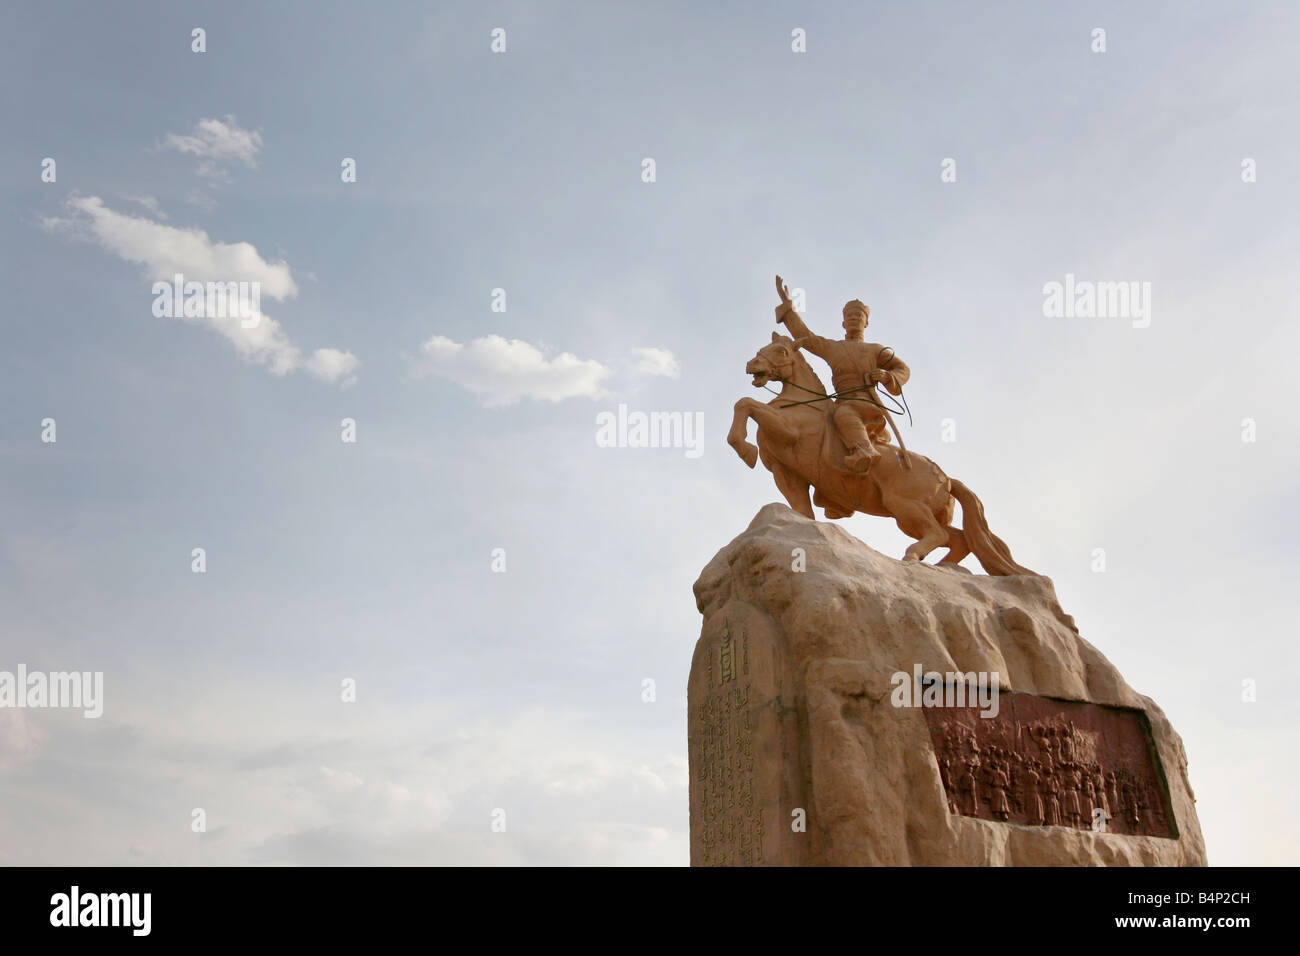 Ulan Bator statue of Damdin Sukhbaatar defeated Ungern von Sternberg and the Chinese Mongolia Stock Photo